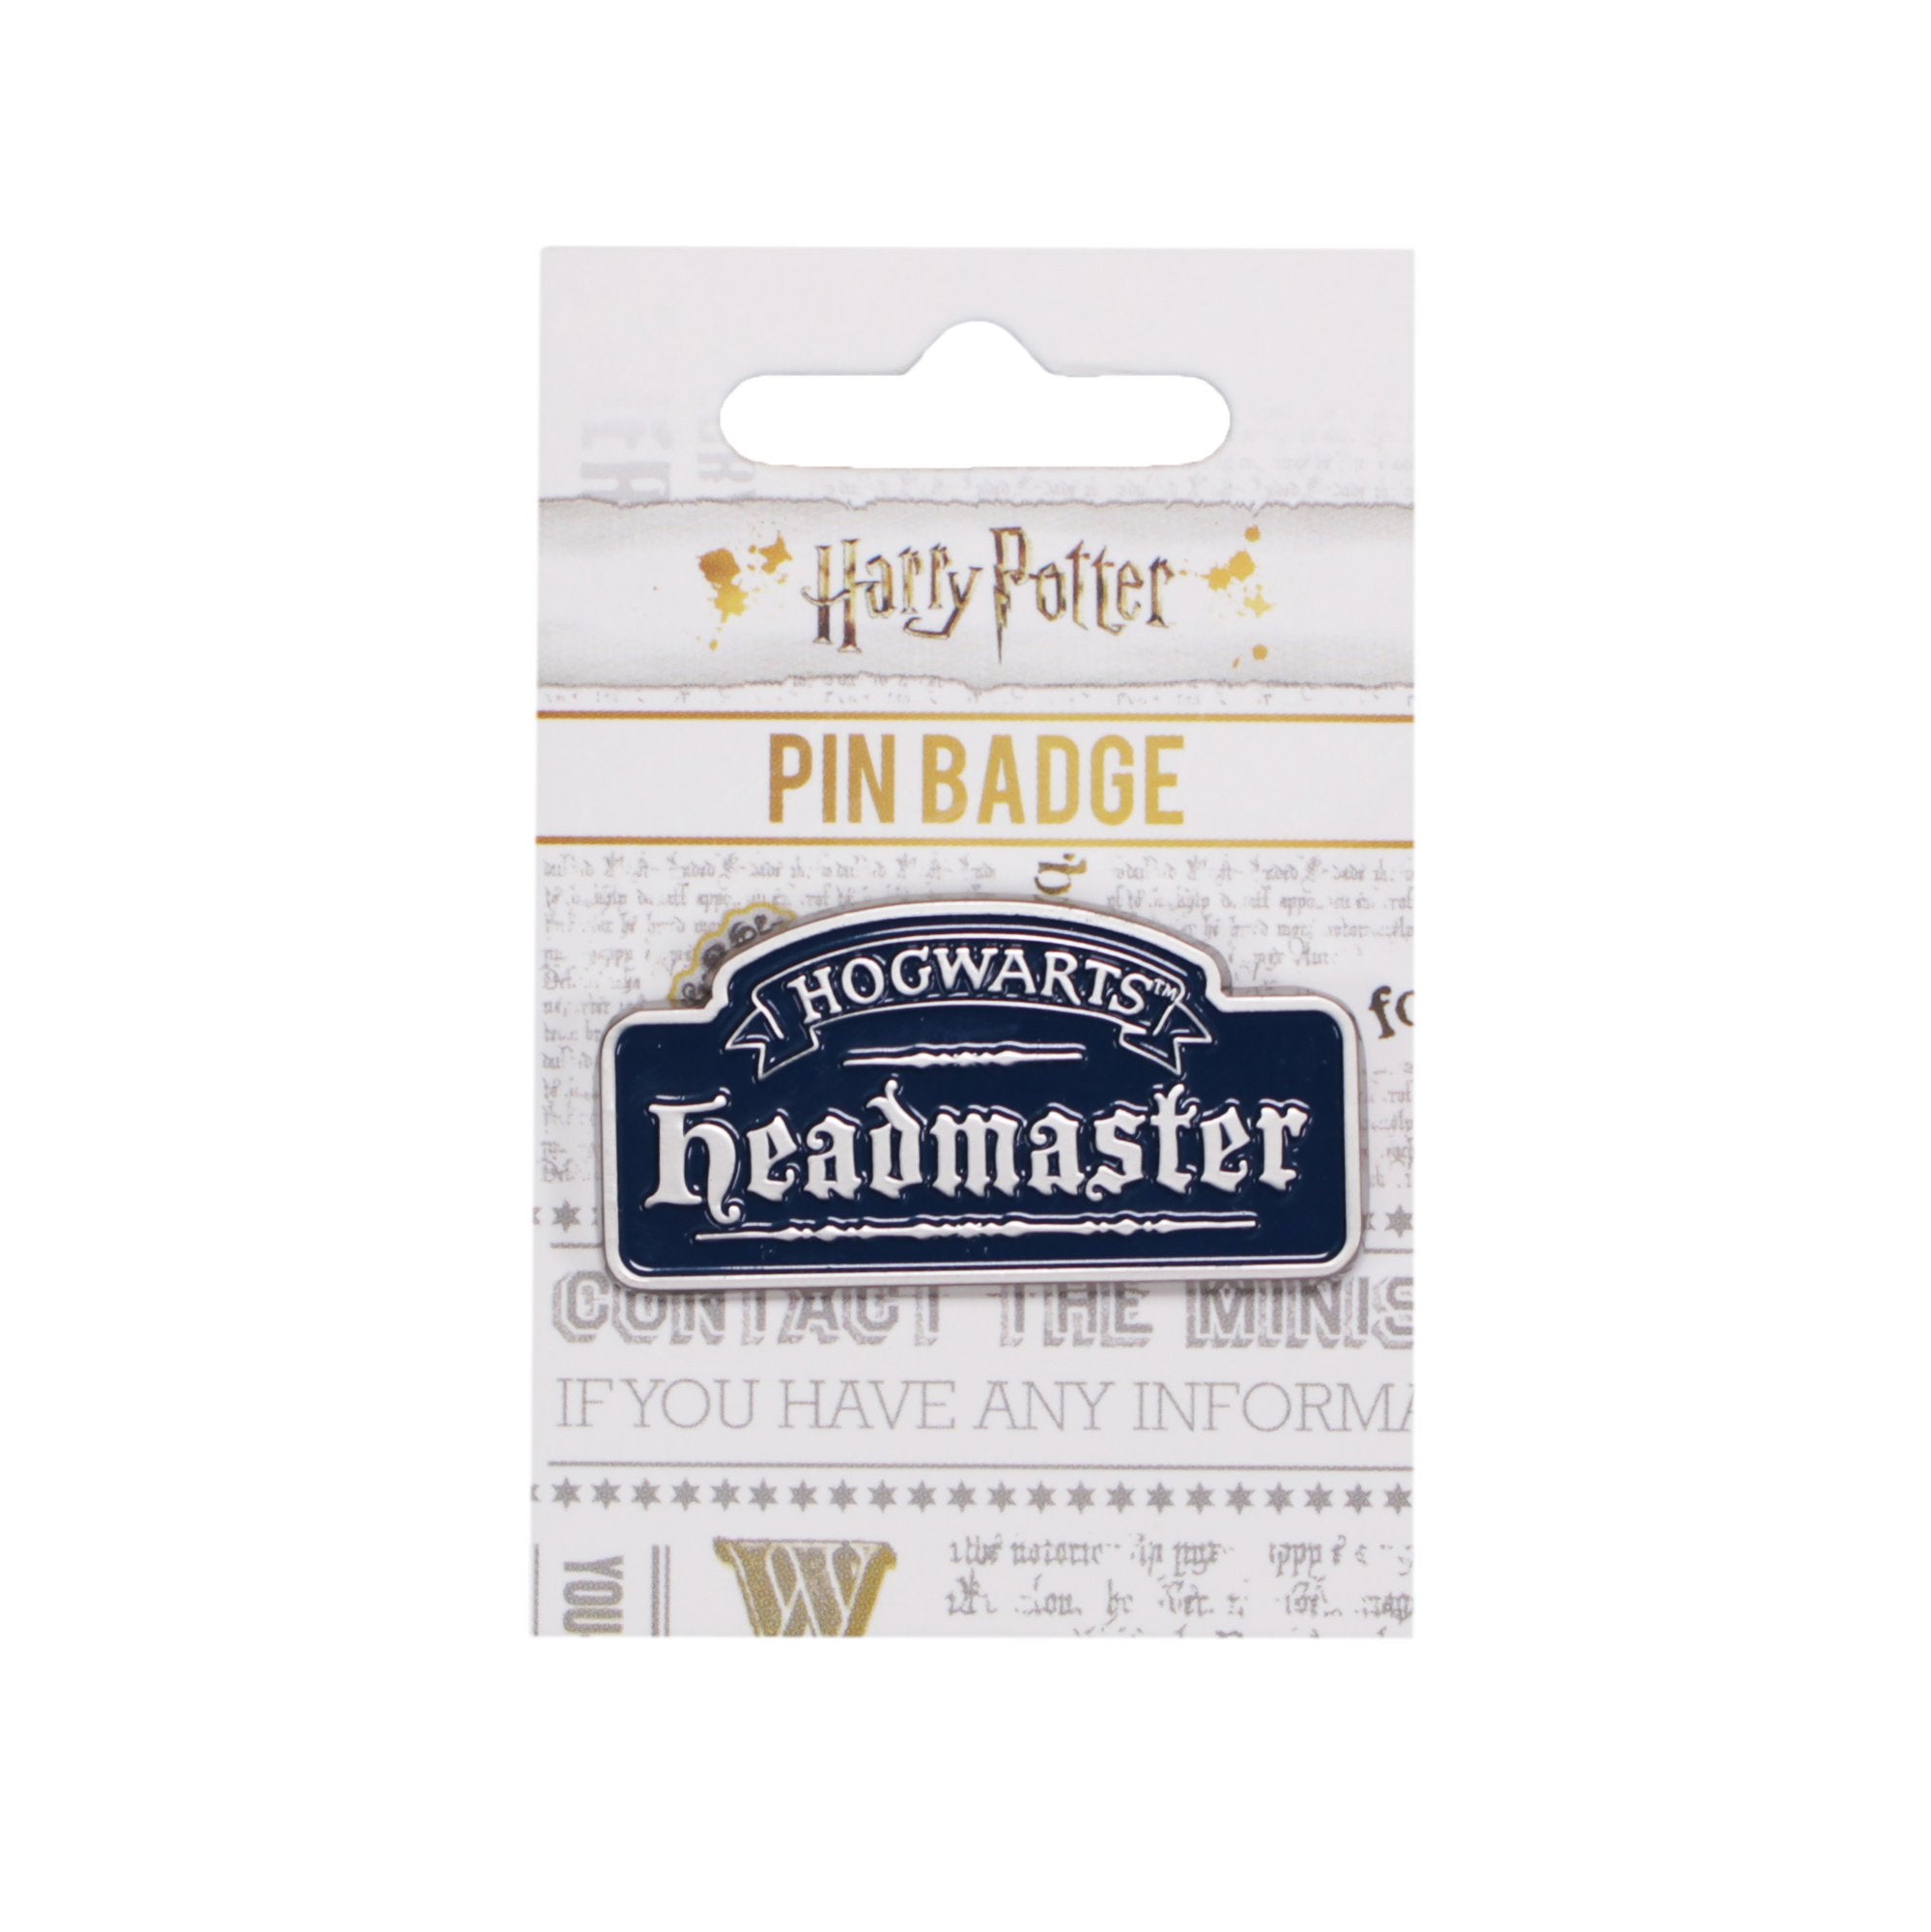 Harry Potter Pin Badge - Headmaster